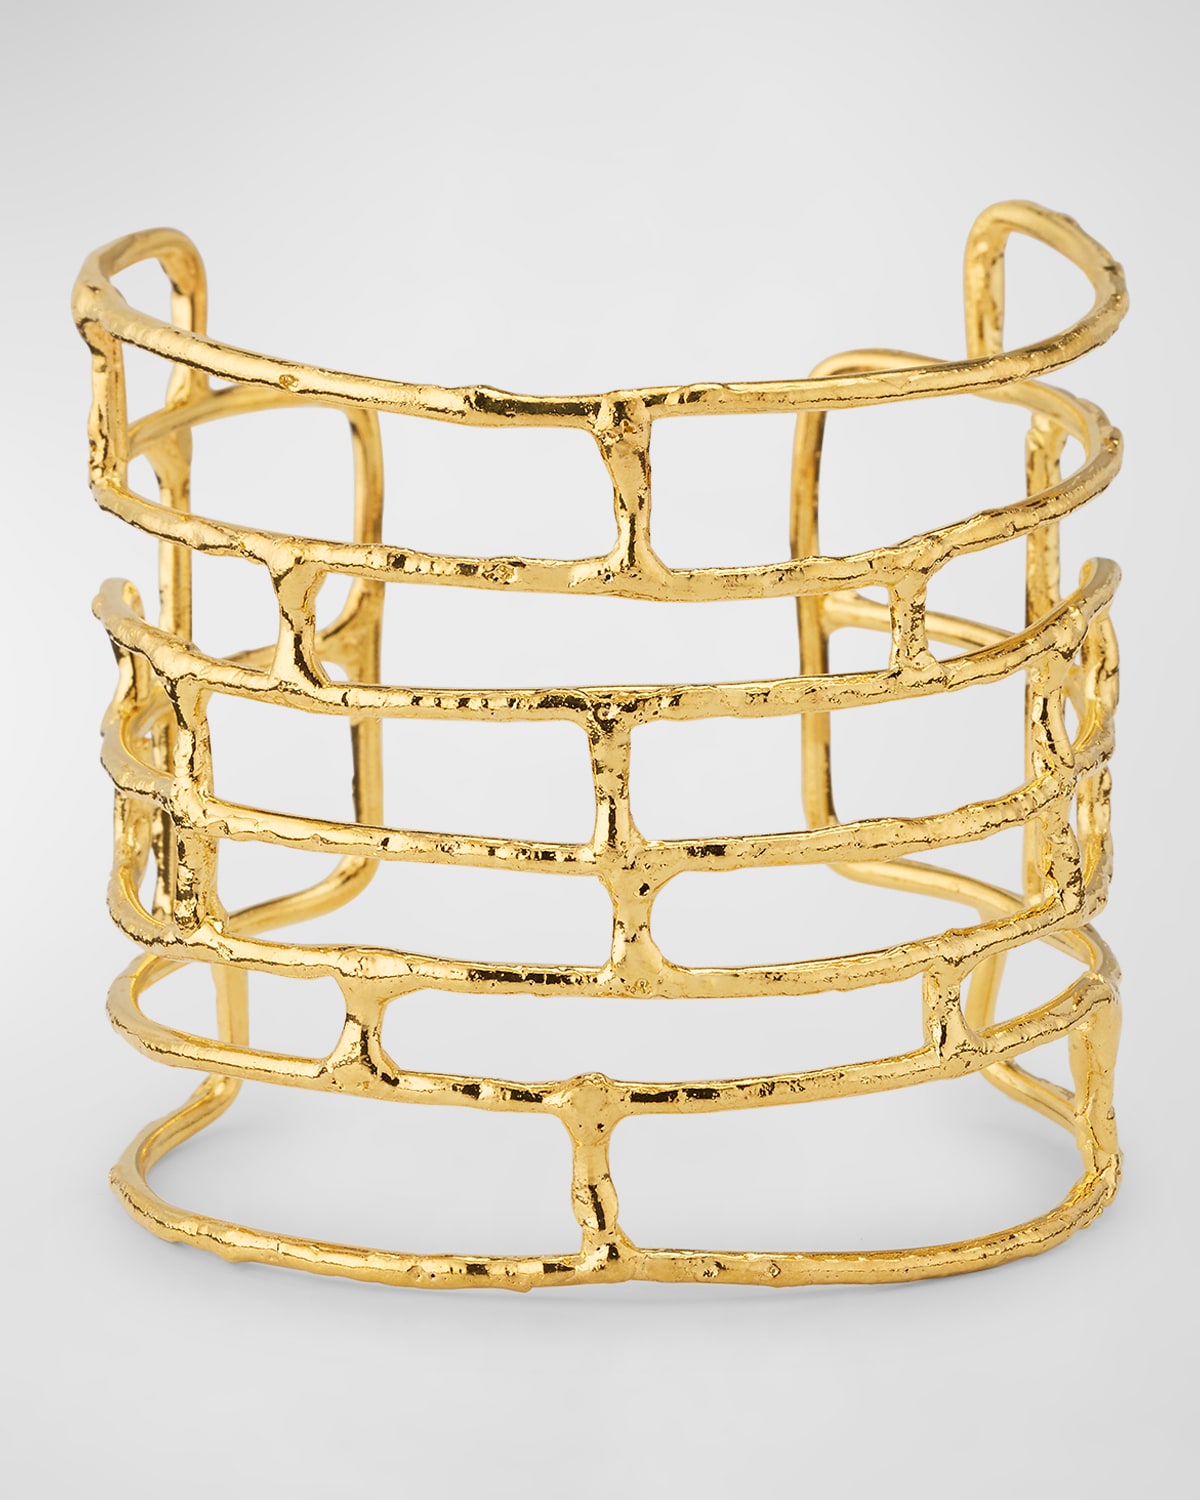 Devon Leigh Gold-plated Open Bars Cuff Bracelet